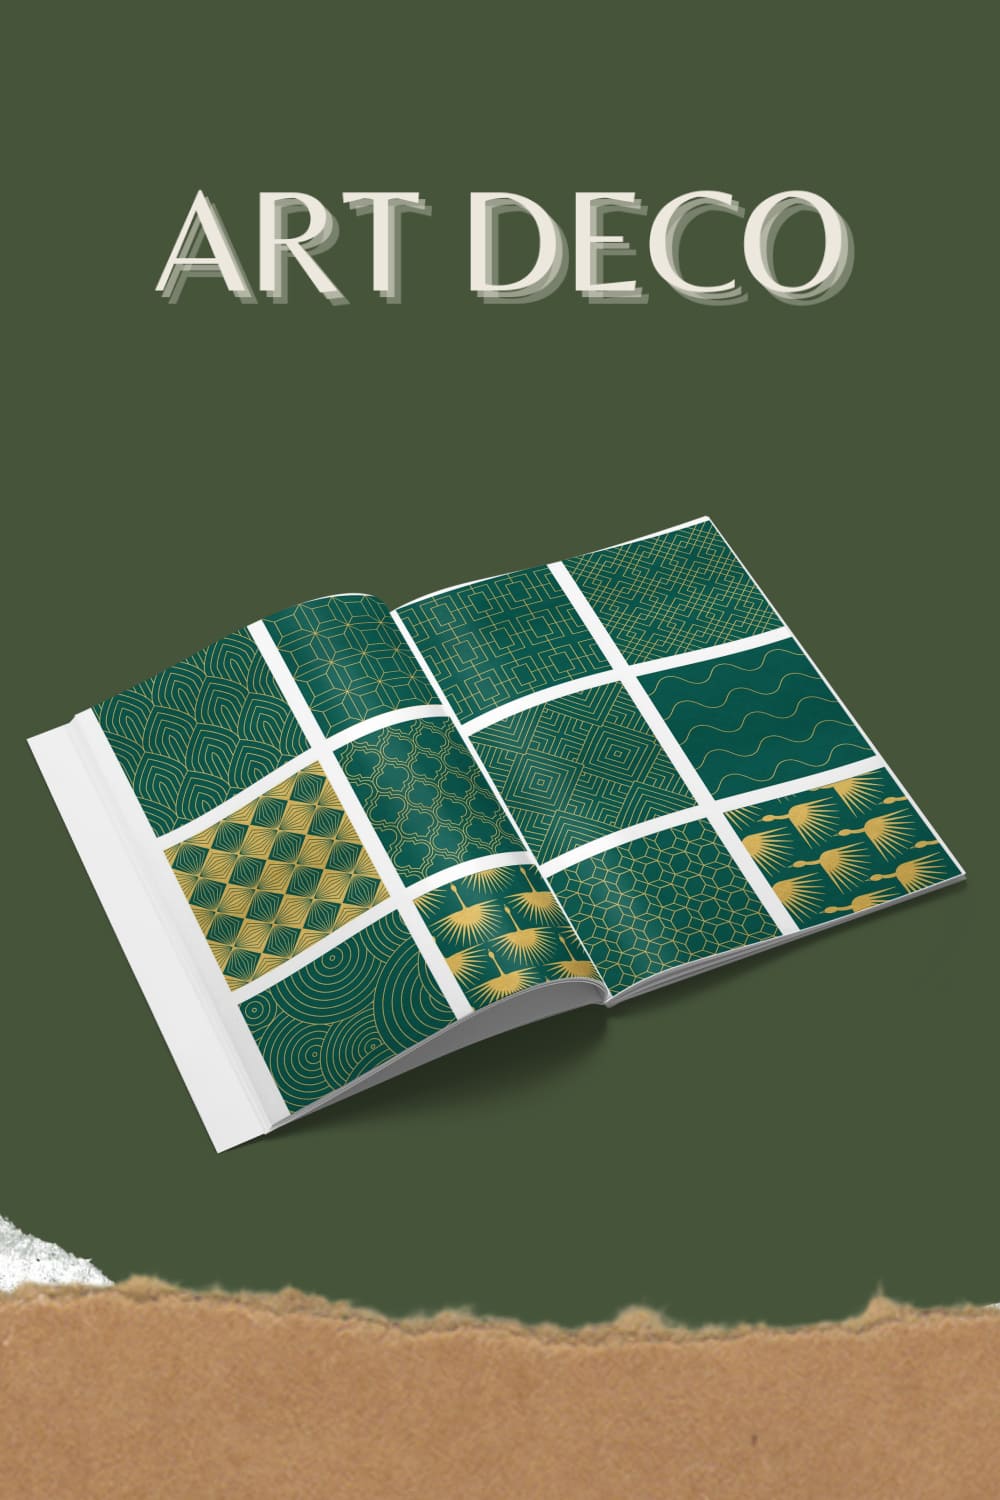 100 Art Deco Patterns - Pinterest.